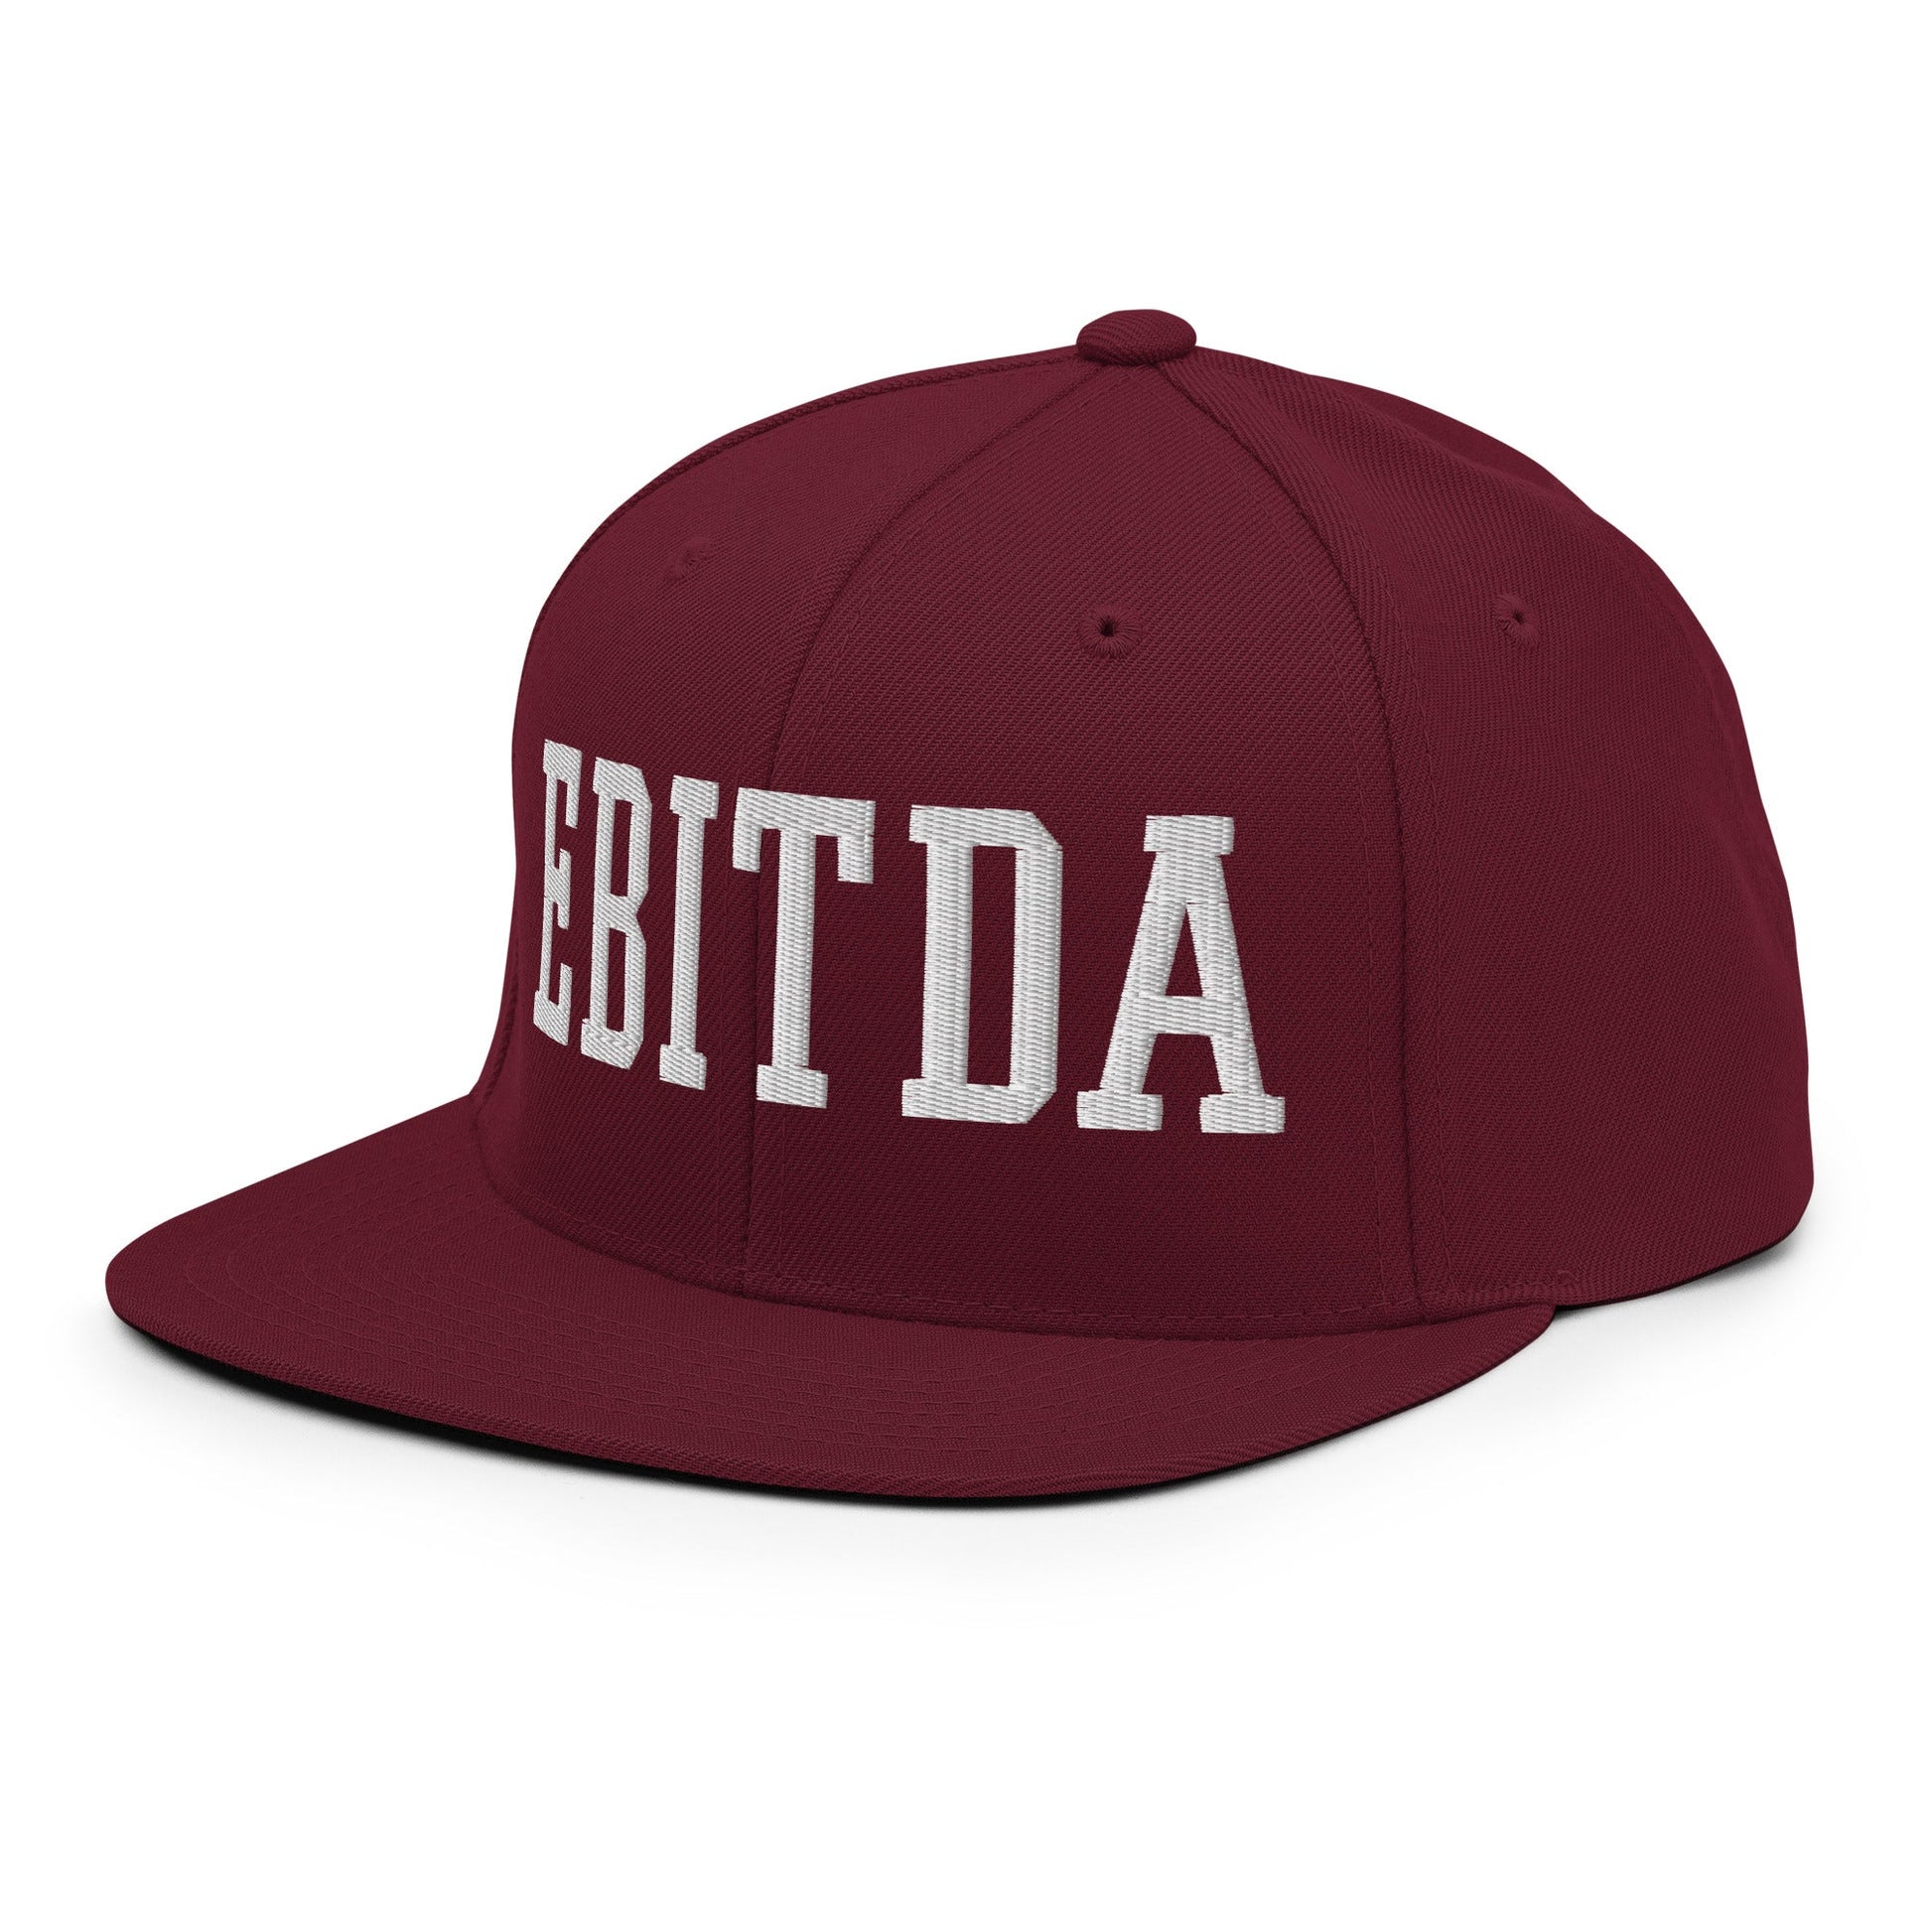 EBITDA Varsity Letterman Block Snapback Hat Maroon